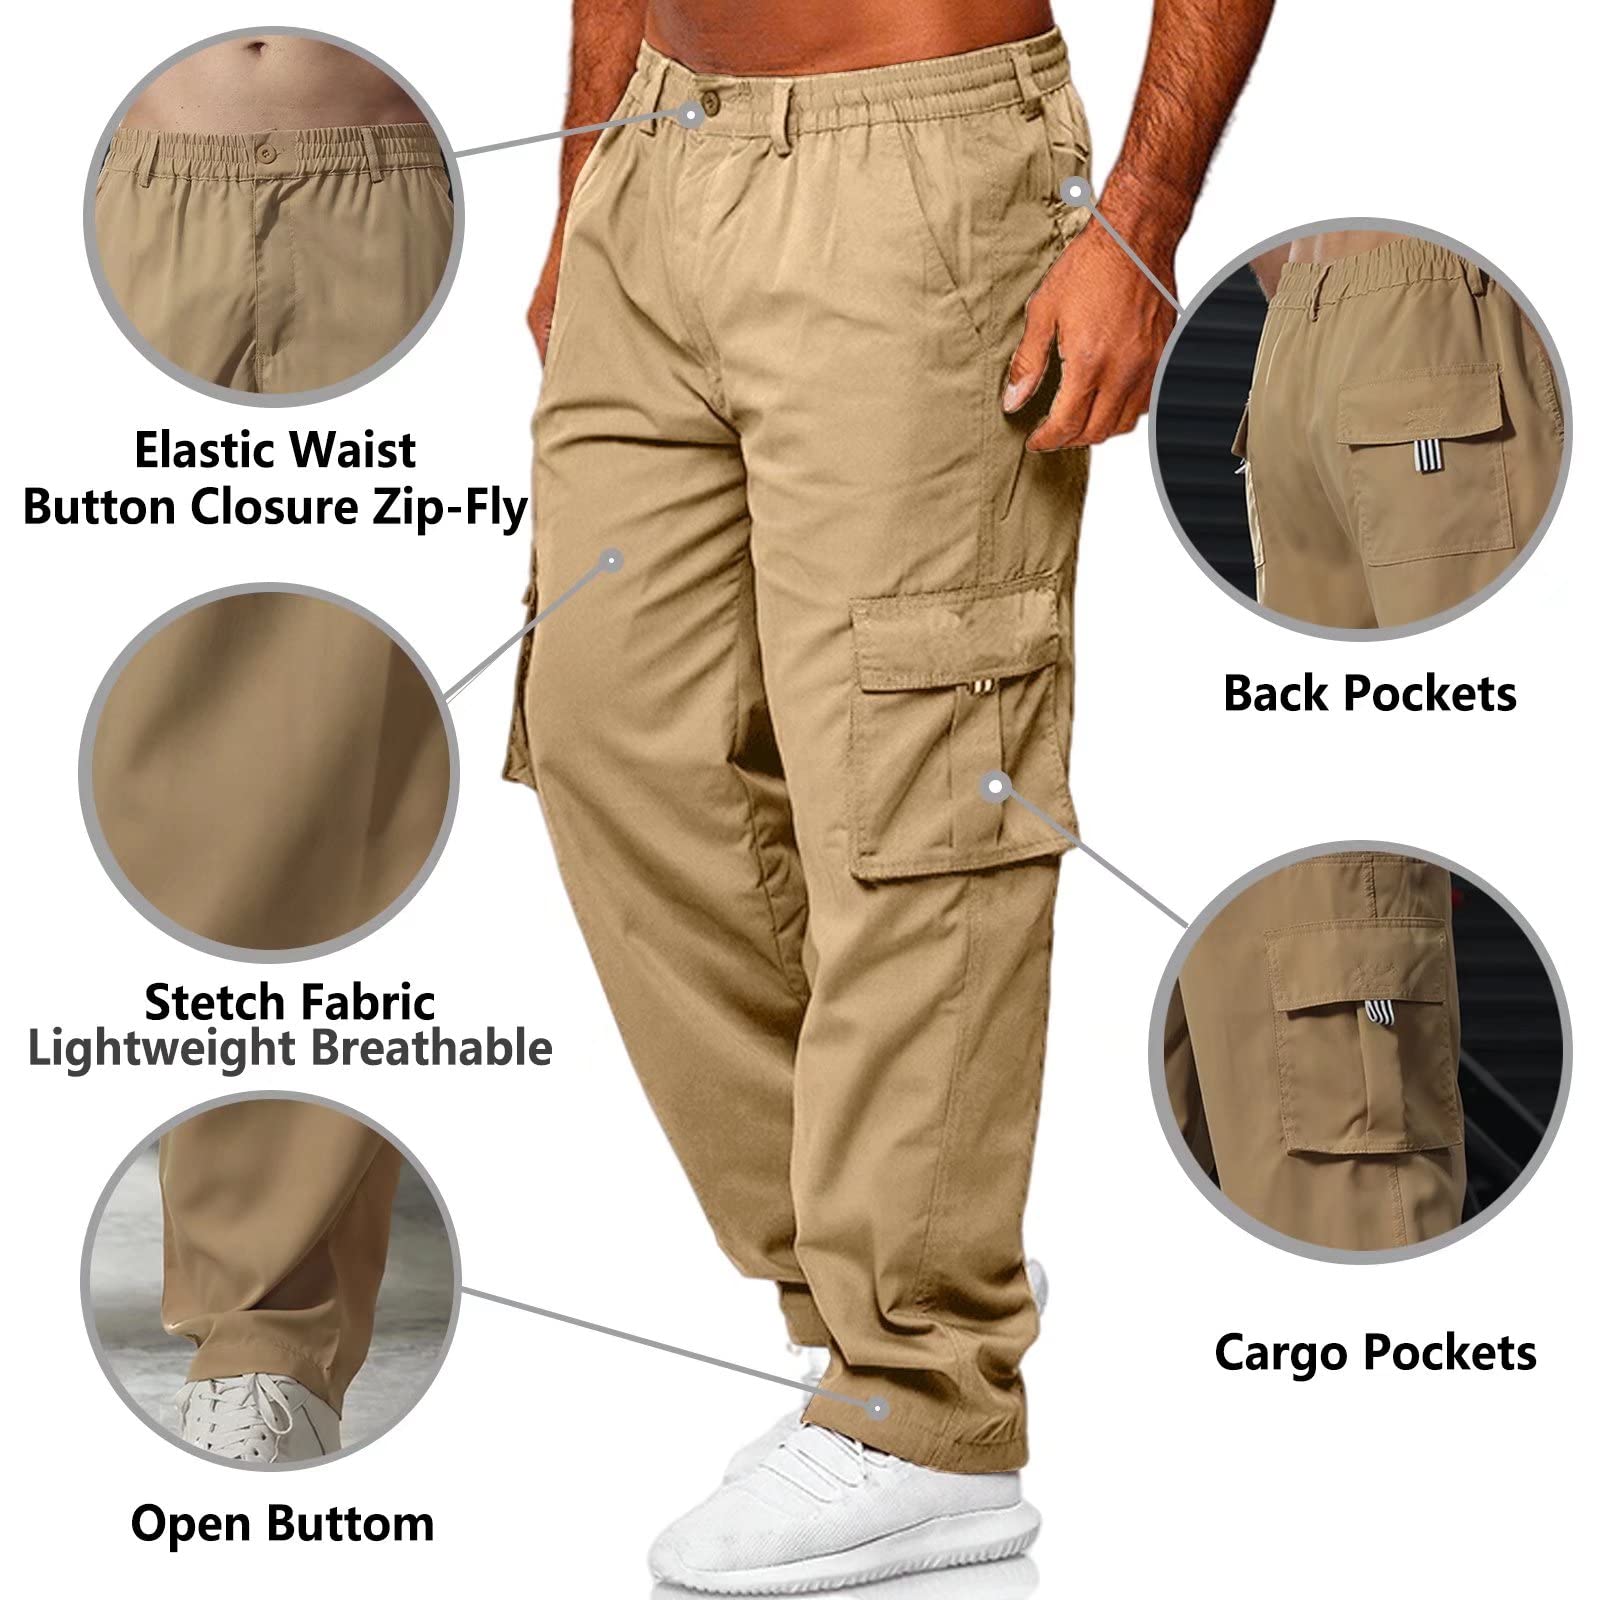 Rela Bota Men Outdoor Cargo Pant Lightweight Tactical Pant Hiking Jogger Classic Fit Multi Pockets 3XL